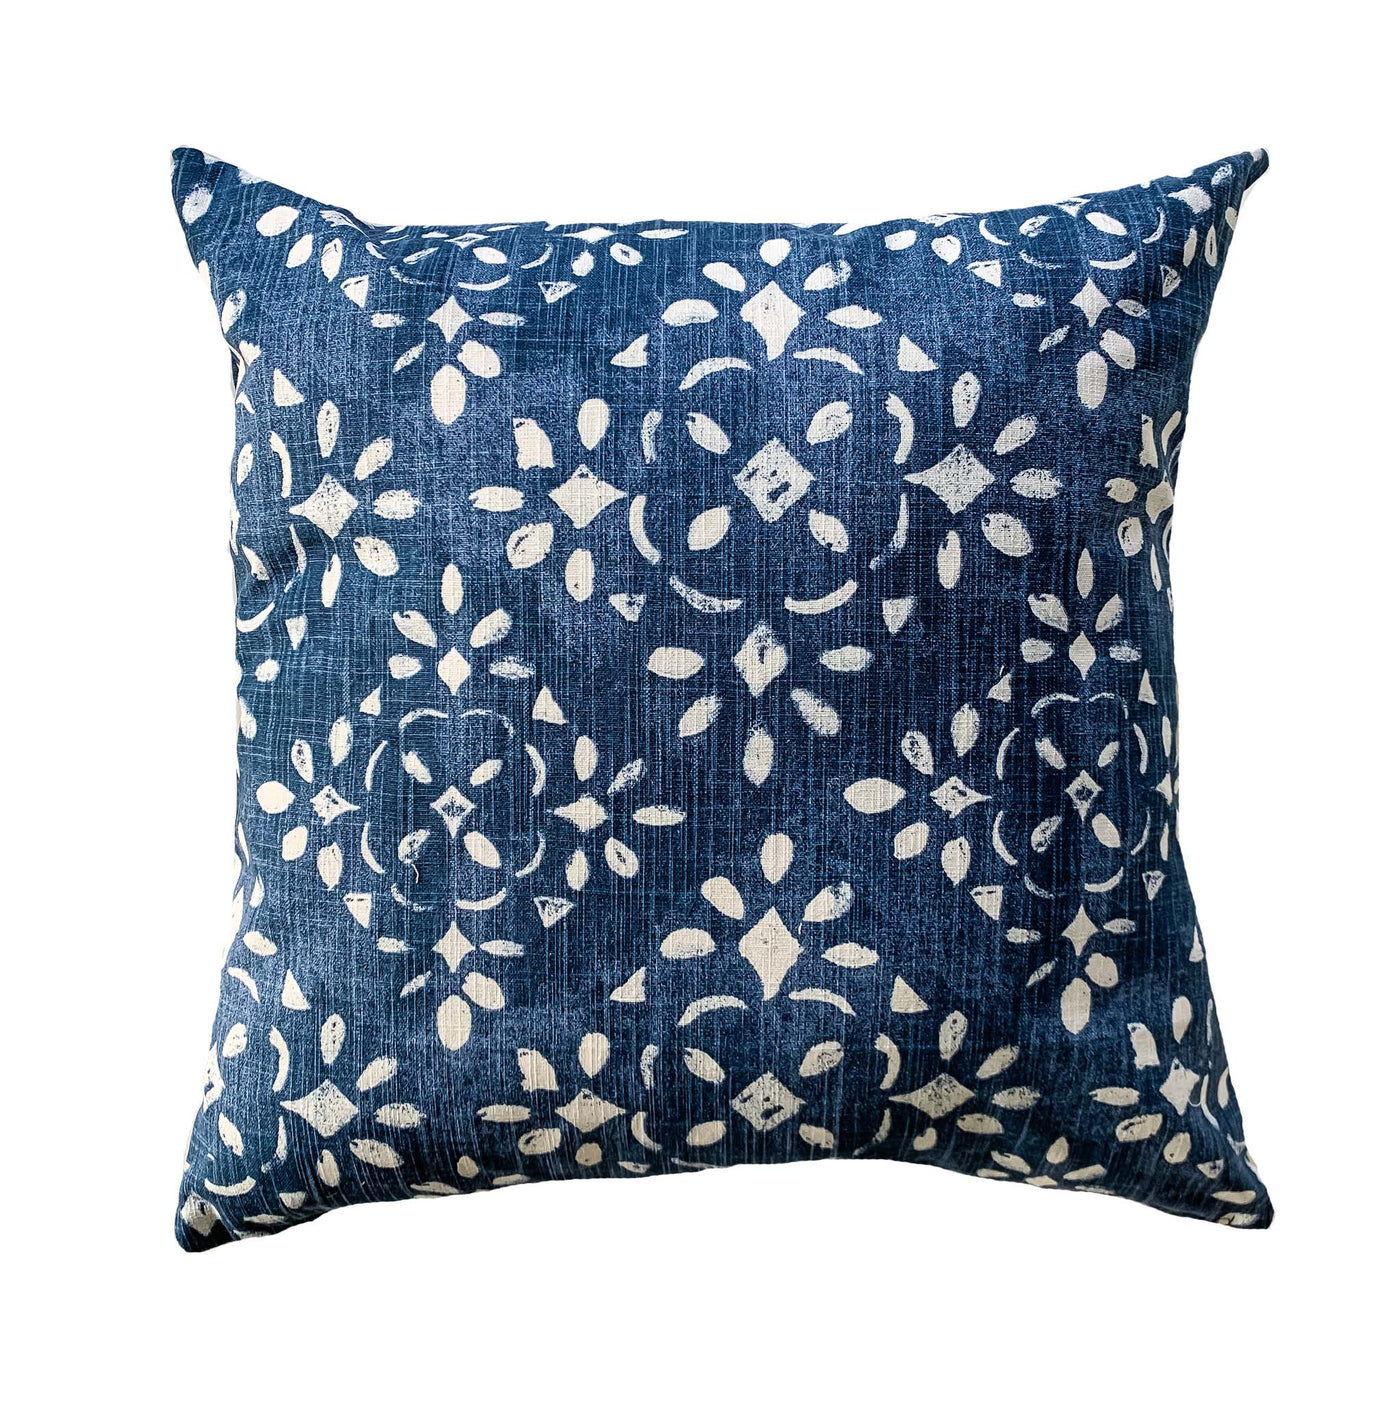 Stylish blue floral pillows - OLVA - Studio Pillows